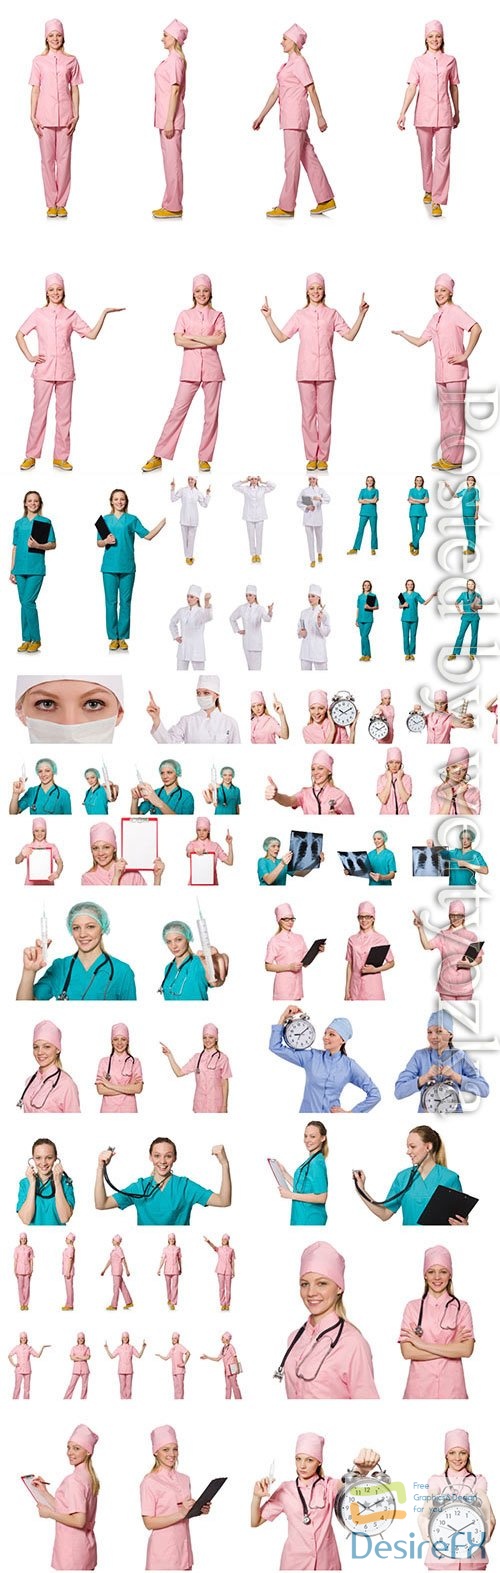 Female doctors in professional uniform stock photo